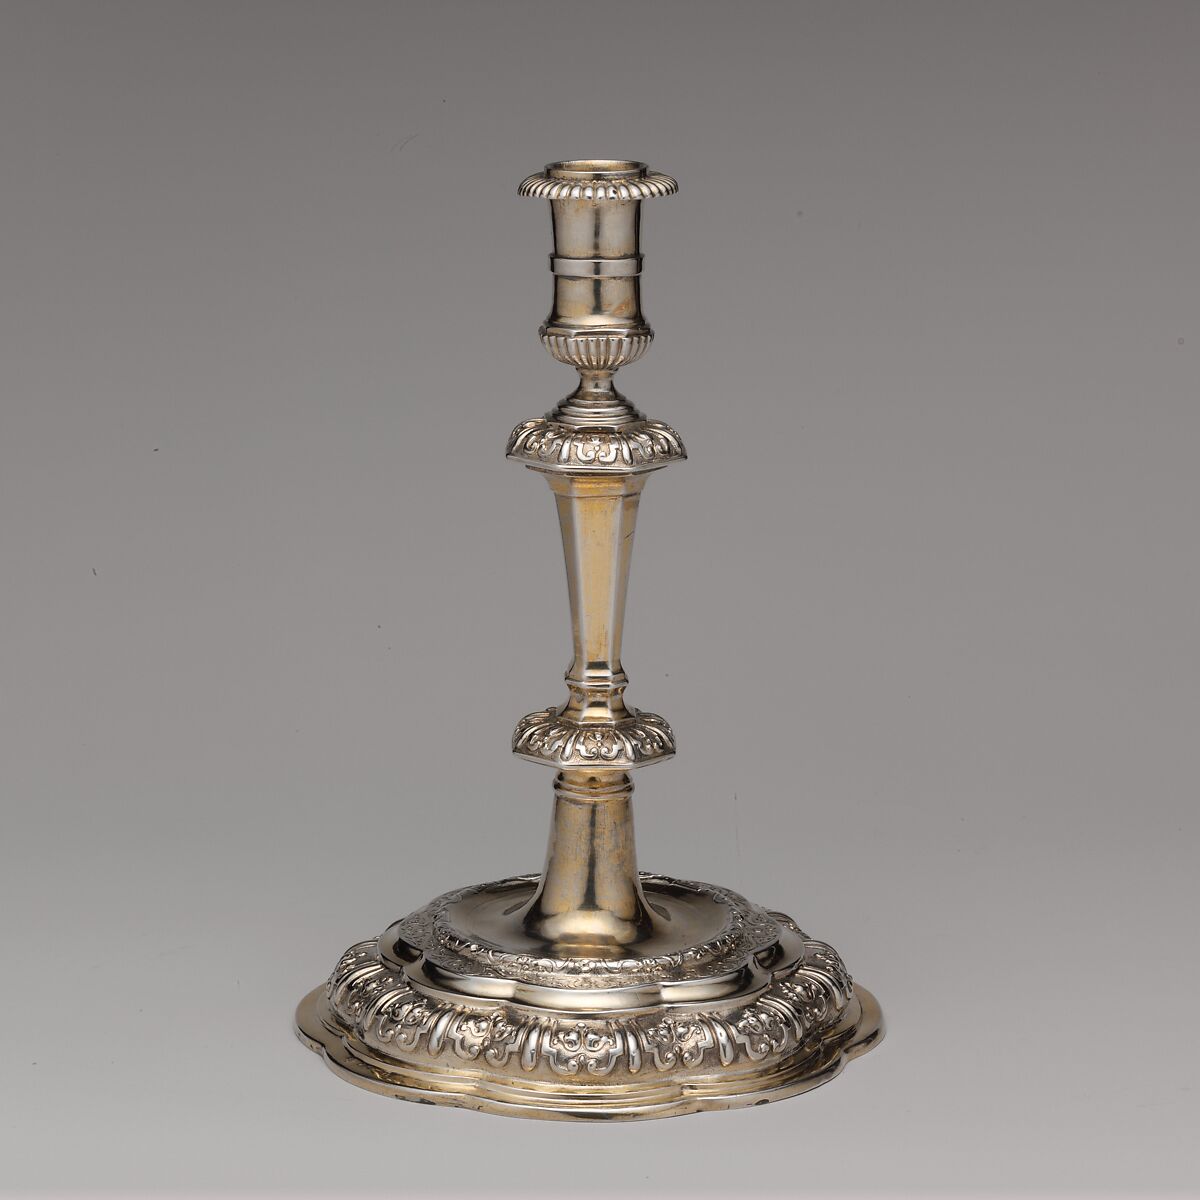 Candlestick (one of a pair), Master "RW" (Swedish, Upsala, early 18th century), Silver, partially gilt, Swedish, Uppsala 